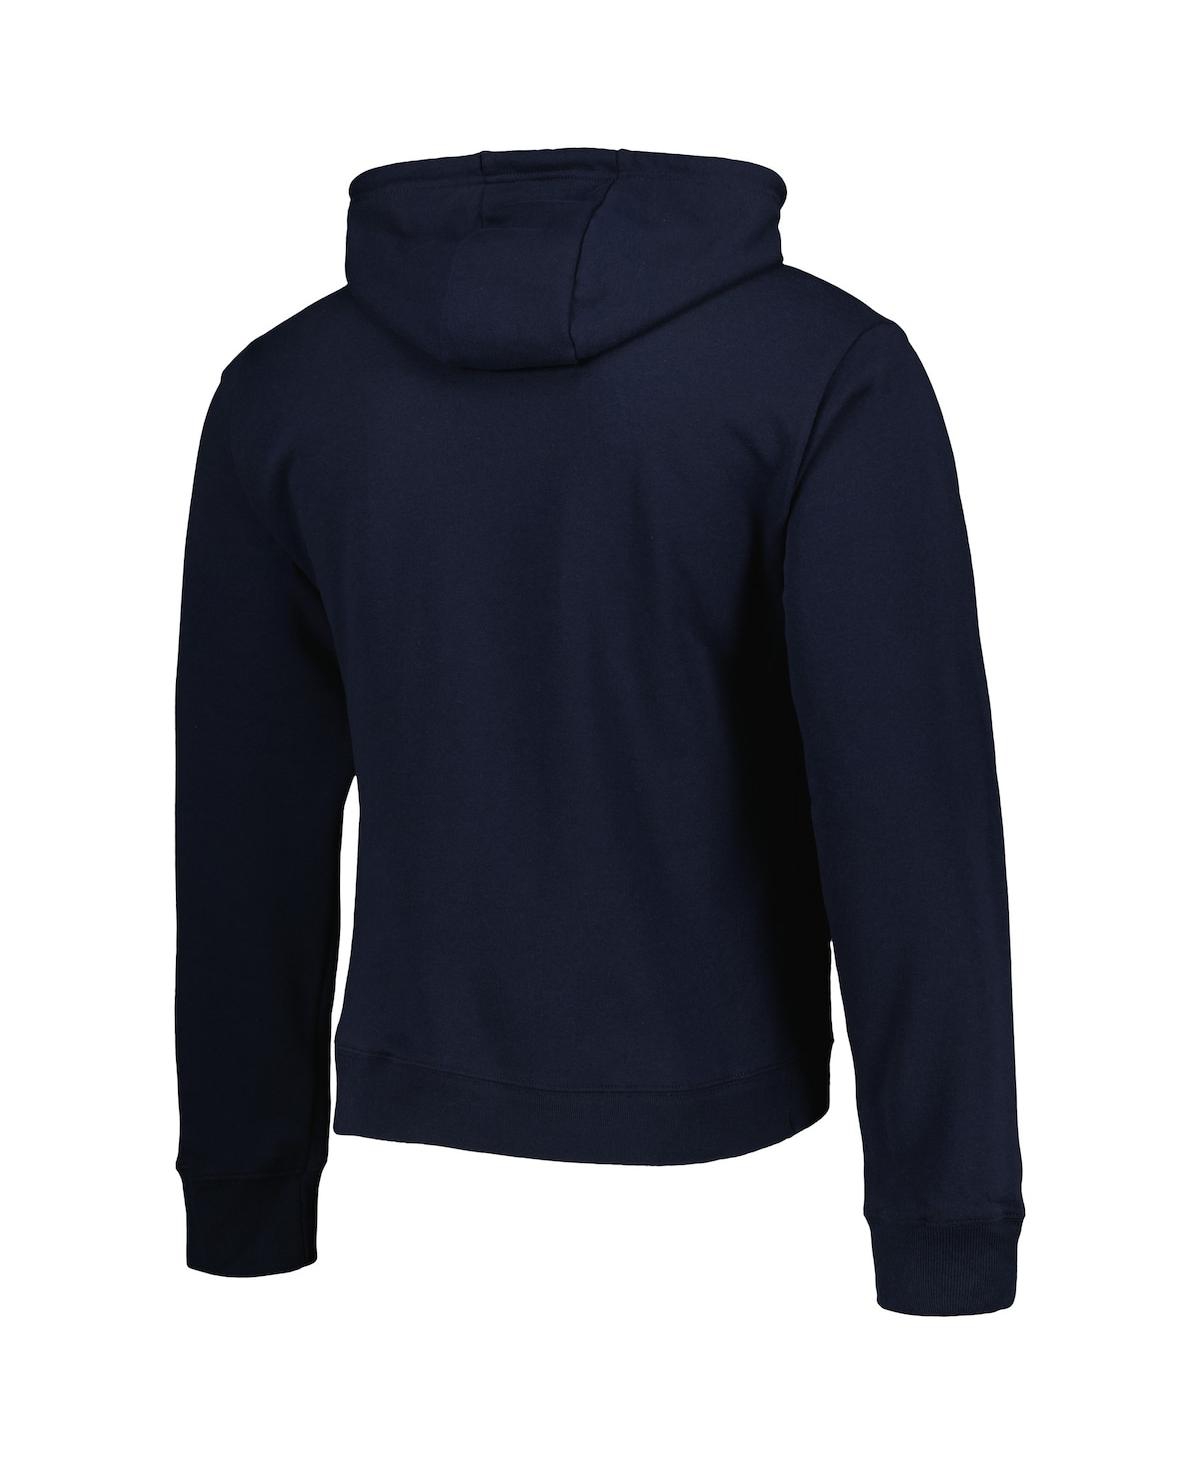 Shop League Collegiate Wear Men's  Navy Navy Midshipmen Arch Essential Fleece Pullover Hoodie